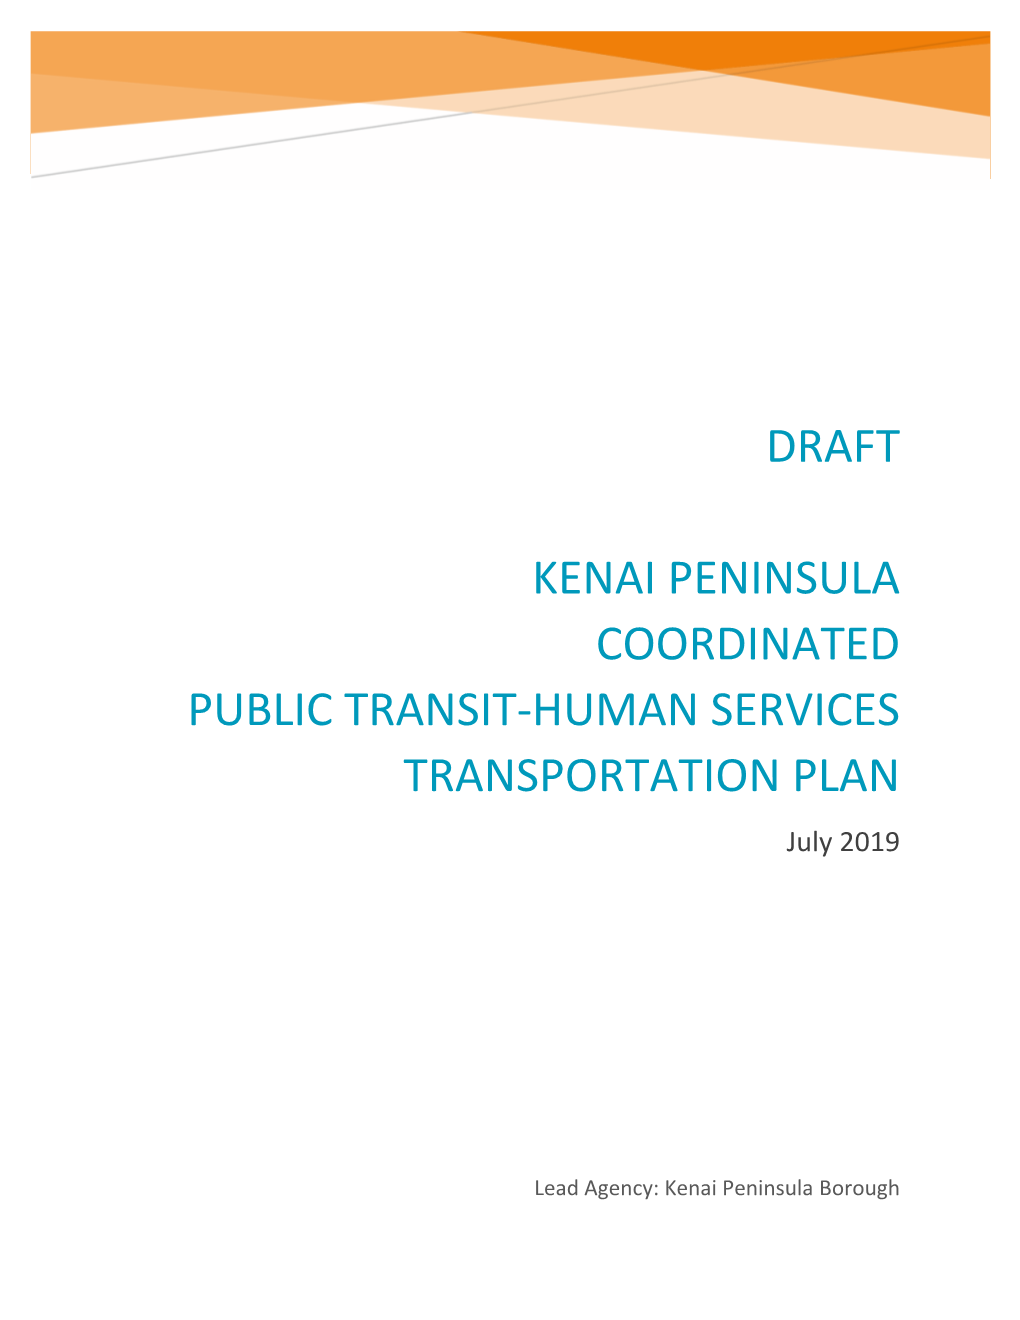 DRAFT Kenai Peninsula Coordinated Public Transit-Human Services